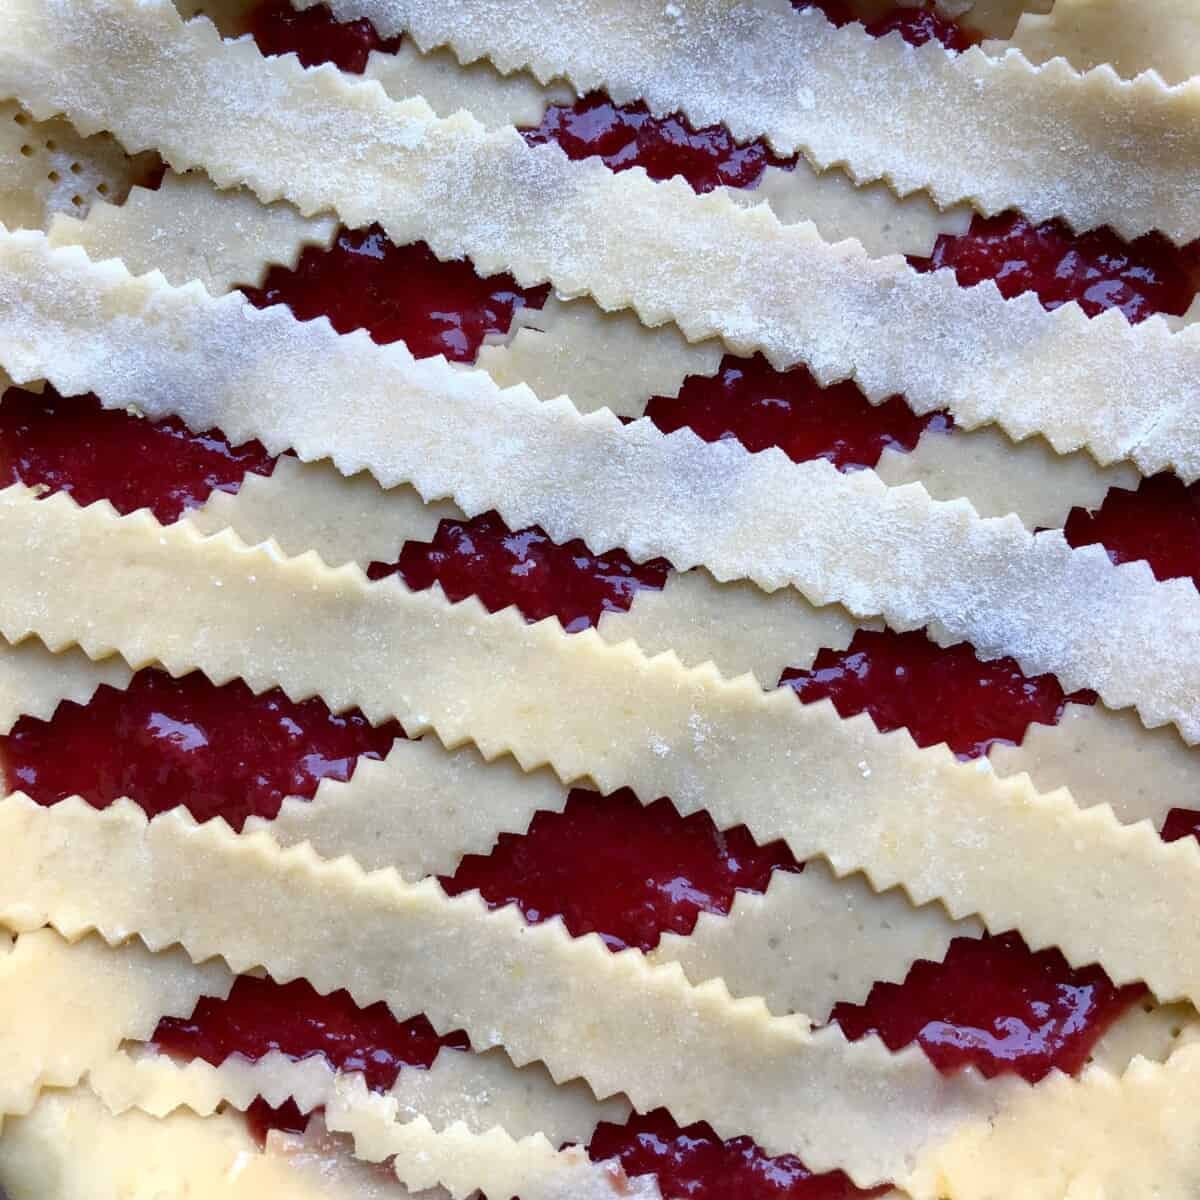 zigzagged edged lattice top covered strawberry jam crostata in a diamond pattern